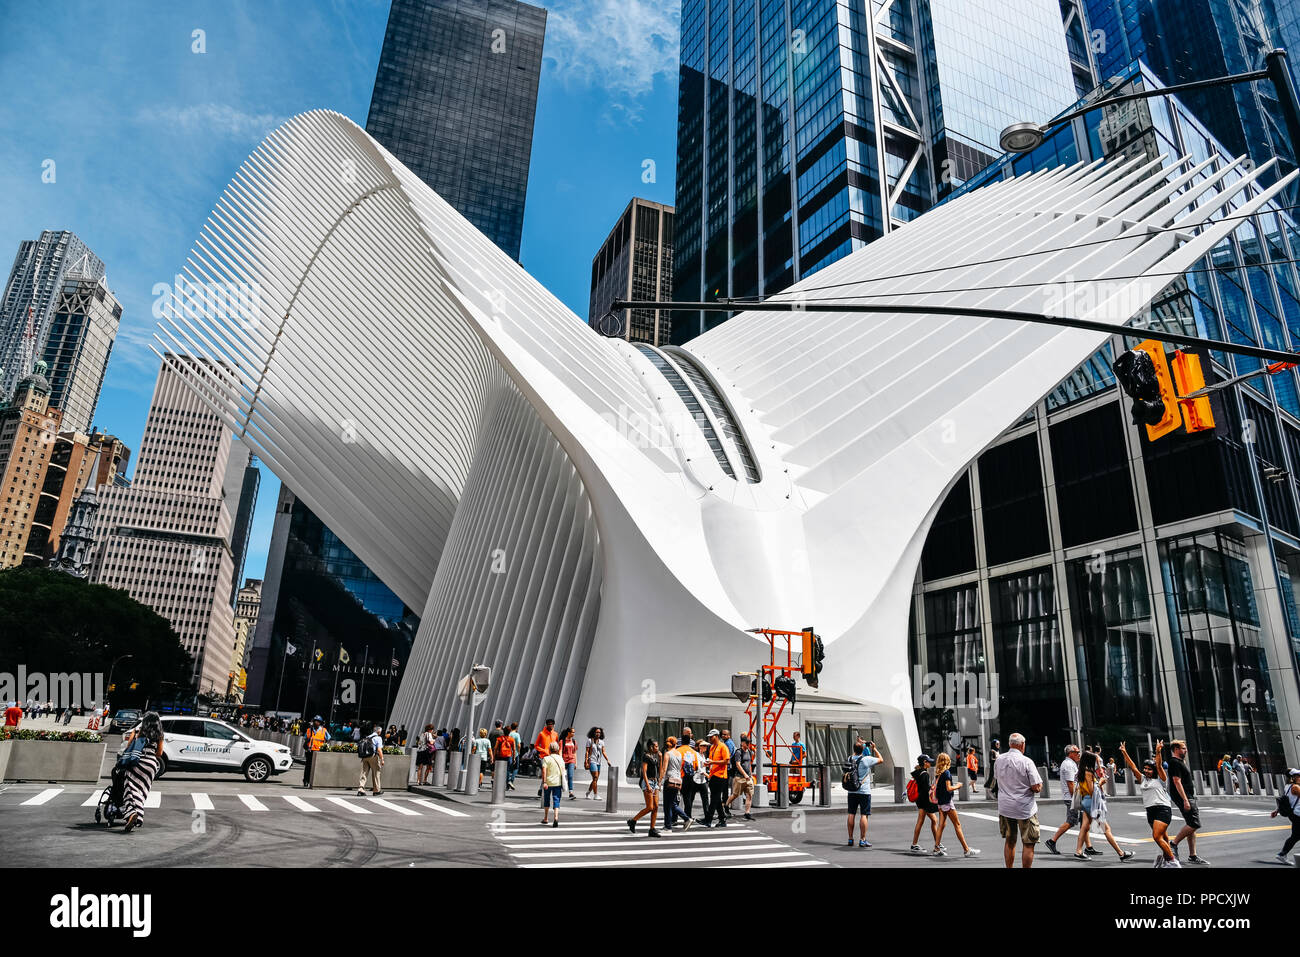 New York City, USA - June 20, 2018: Outdoor view of World Trade Center Transportation Hub or Oculus designed by Santiago Calatrava architect in Financ Stock Photo